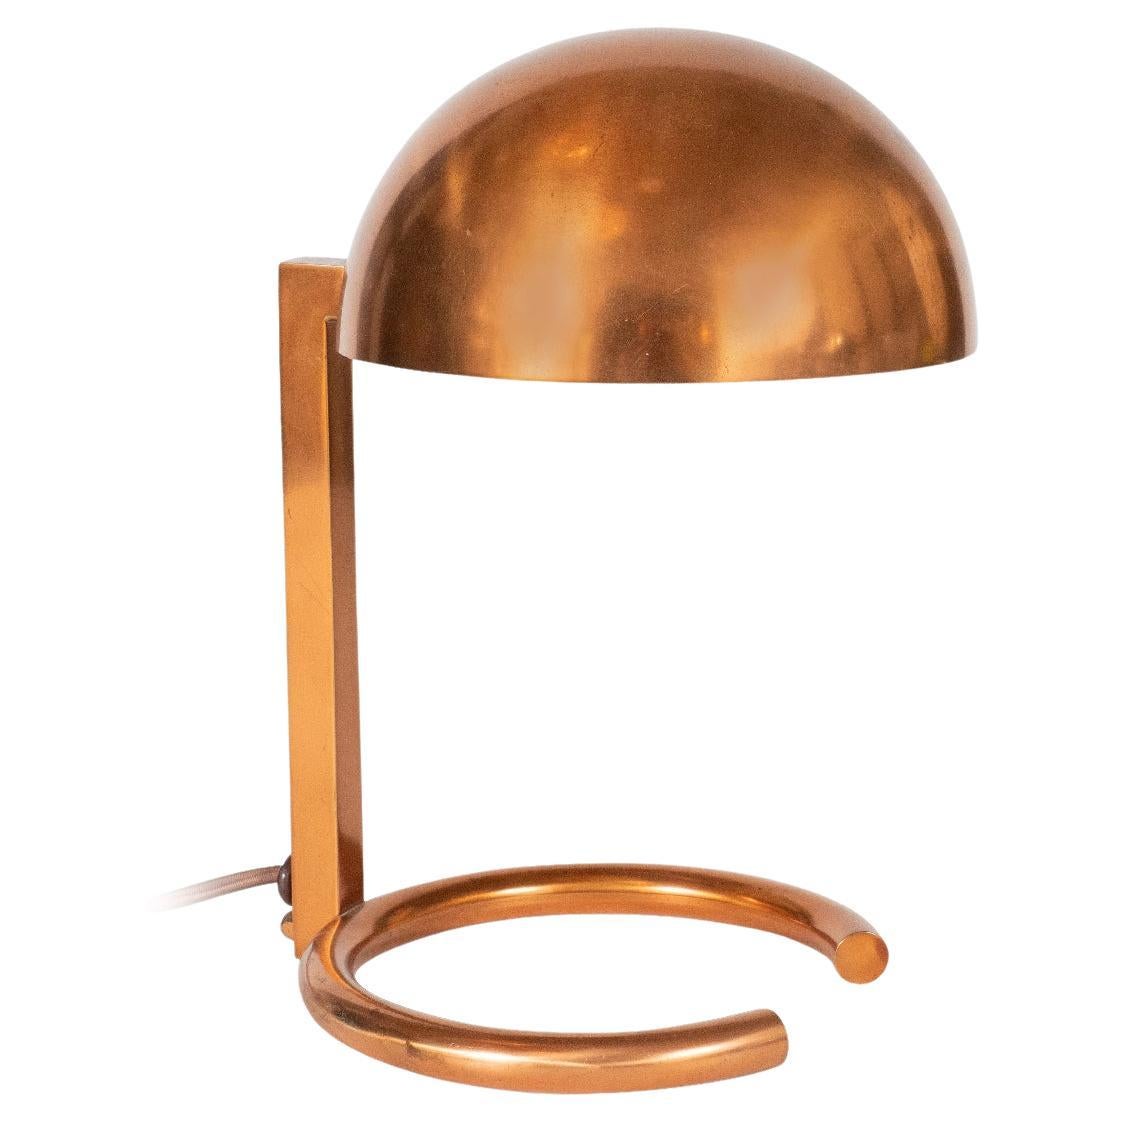  Modernist Copper Desk Lamp by Adnet For Sale